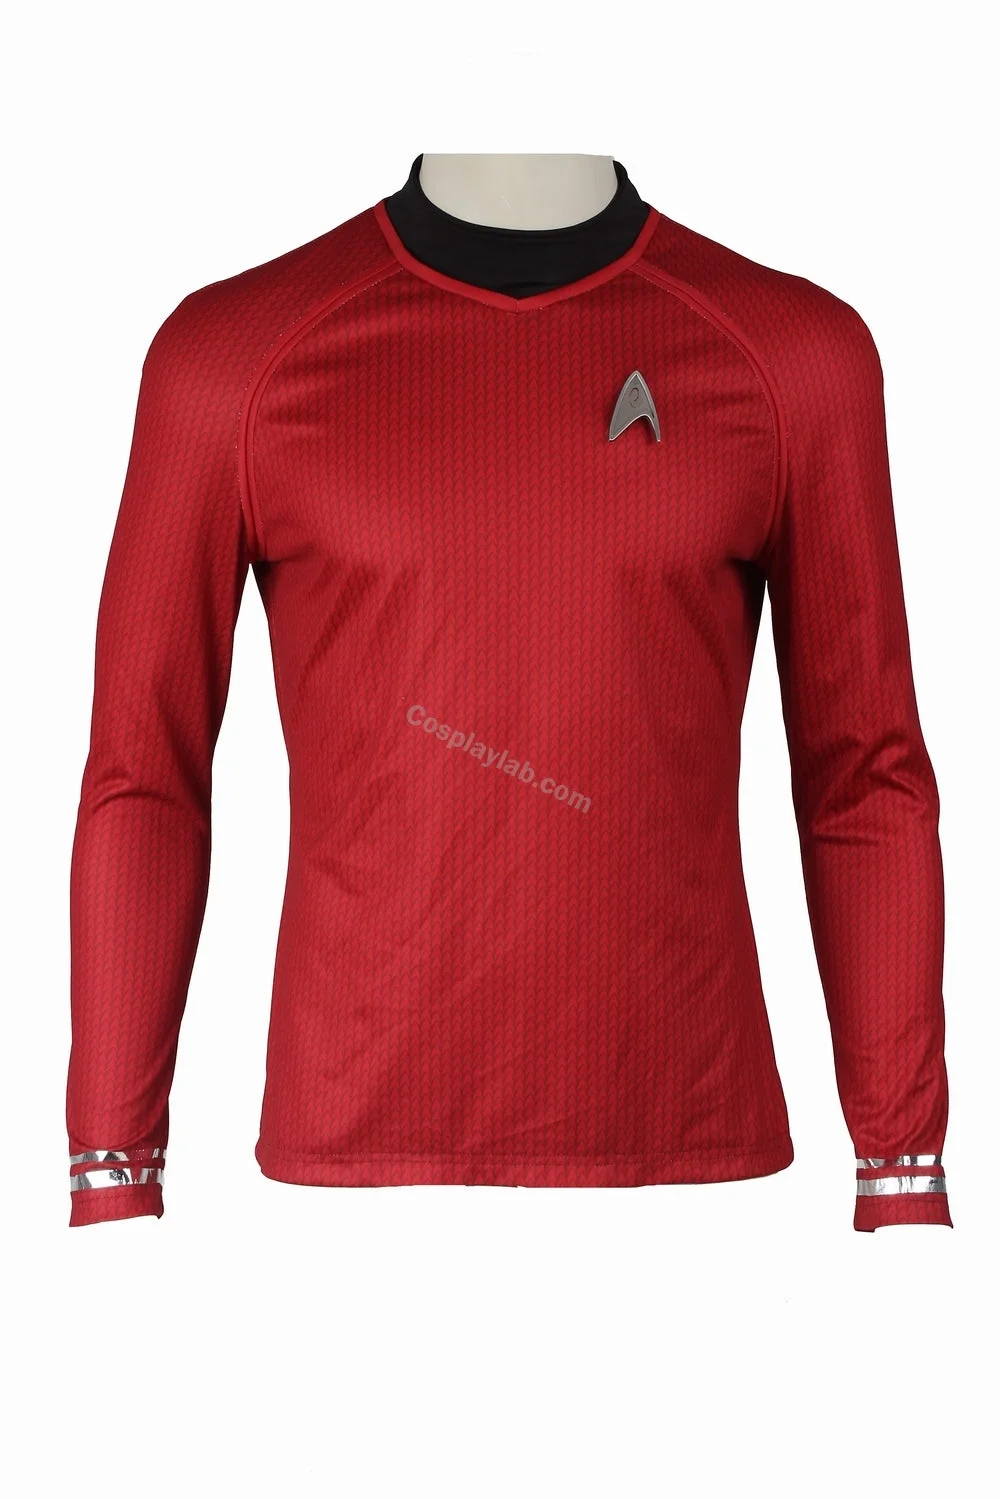 star trek red cosplay T-Shirt costume uniform